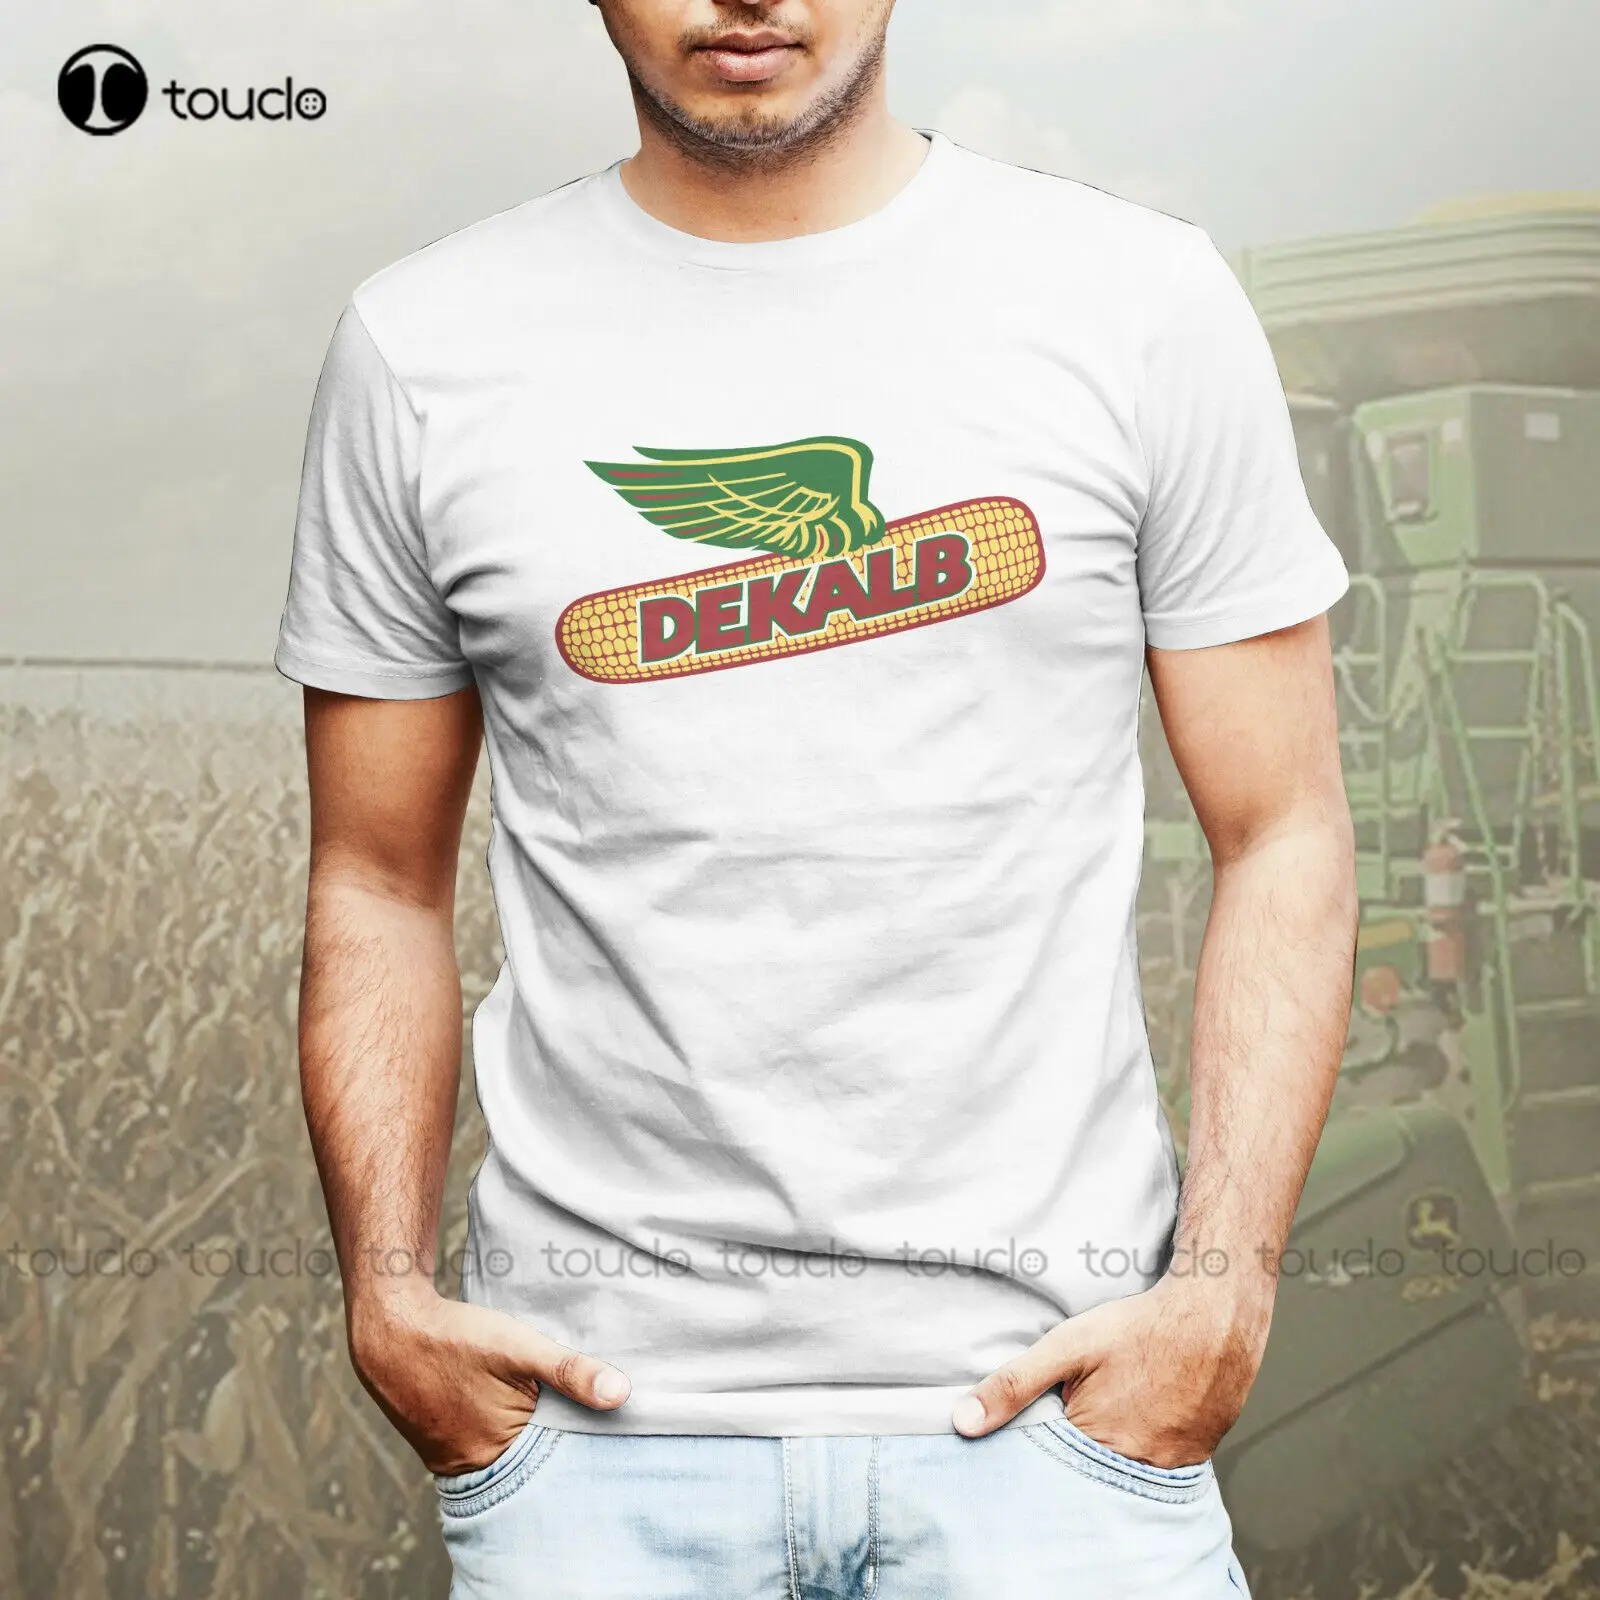 Dekalb Corn Seed Farmer Farm Wear Vintage Retro Logo Mens Tee T-Shirt White Unisex Women Men Tee Shirt